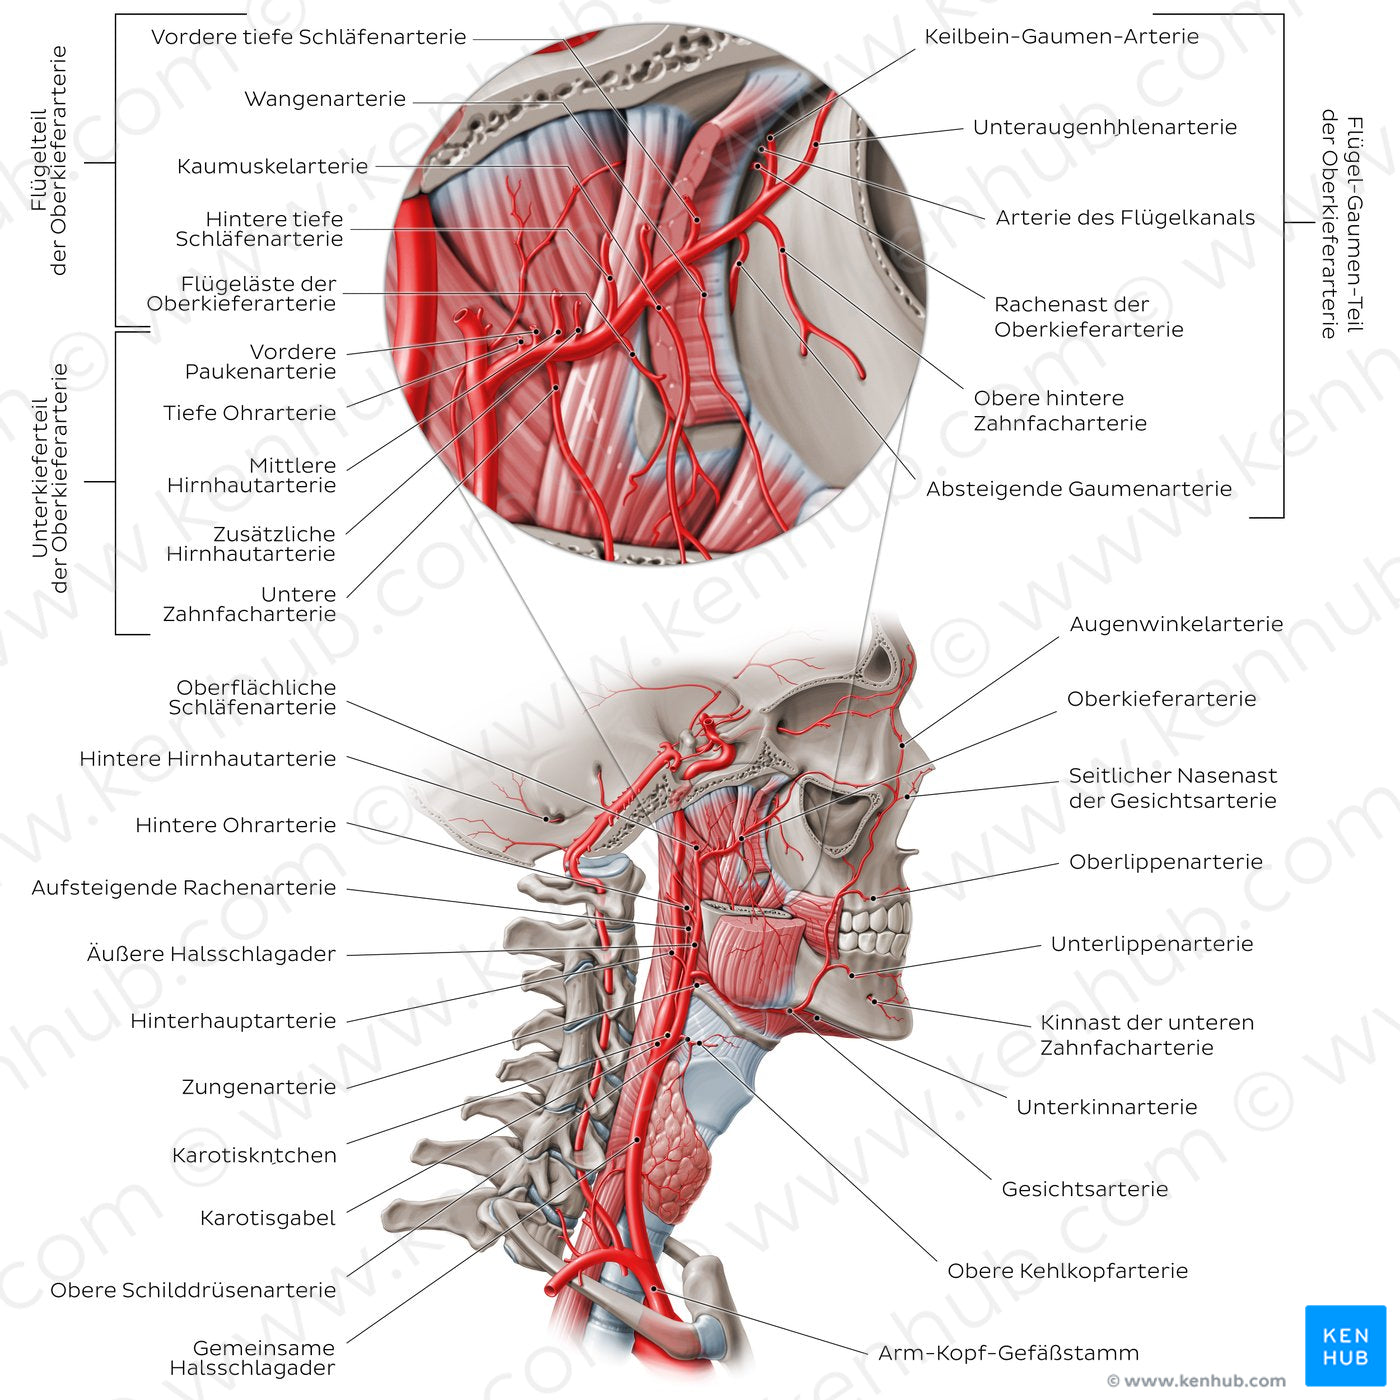 Arteries of the head: External carotid artery (German)